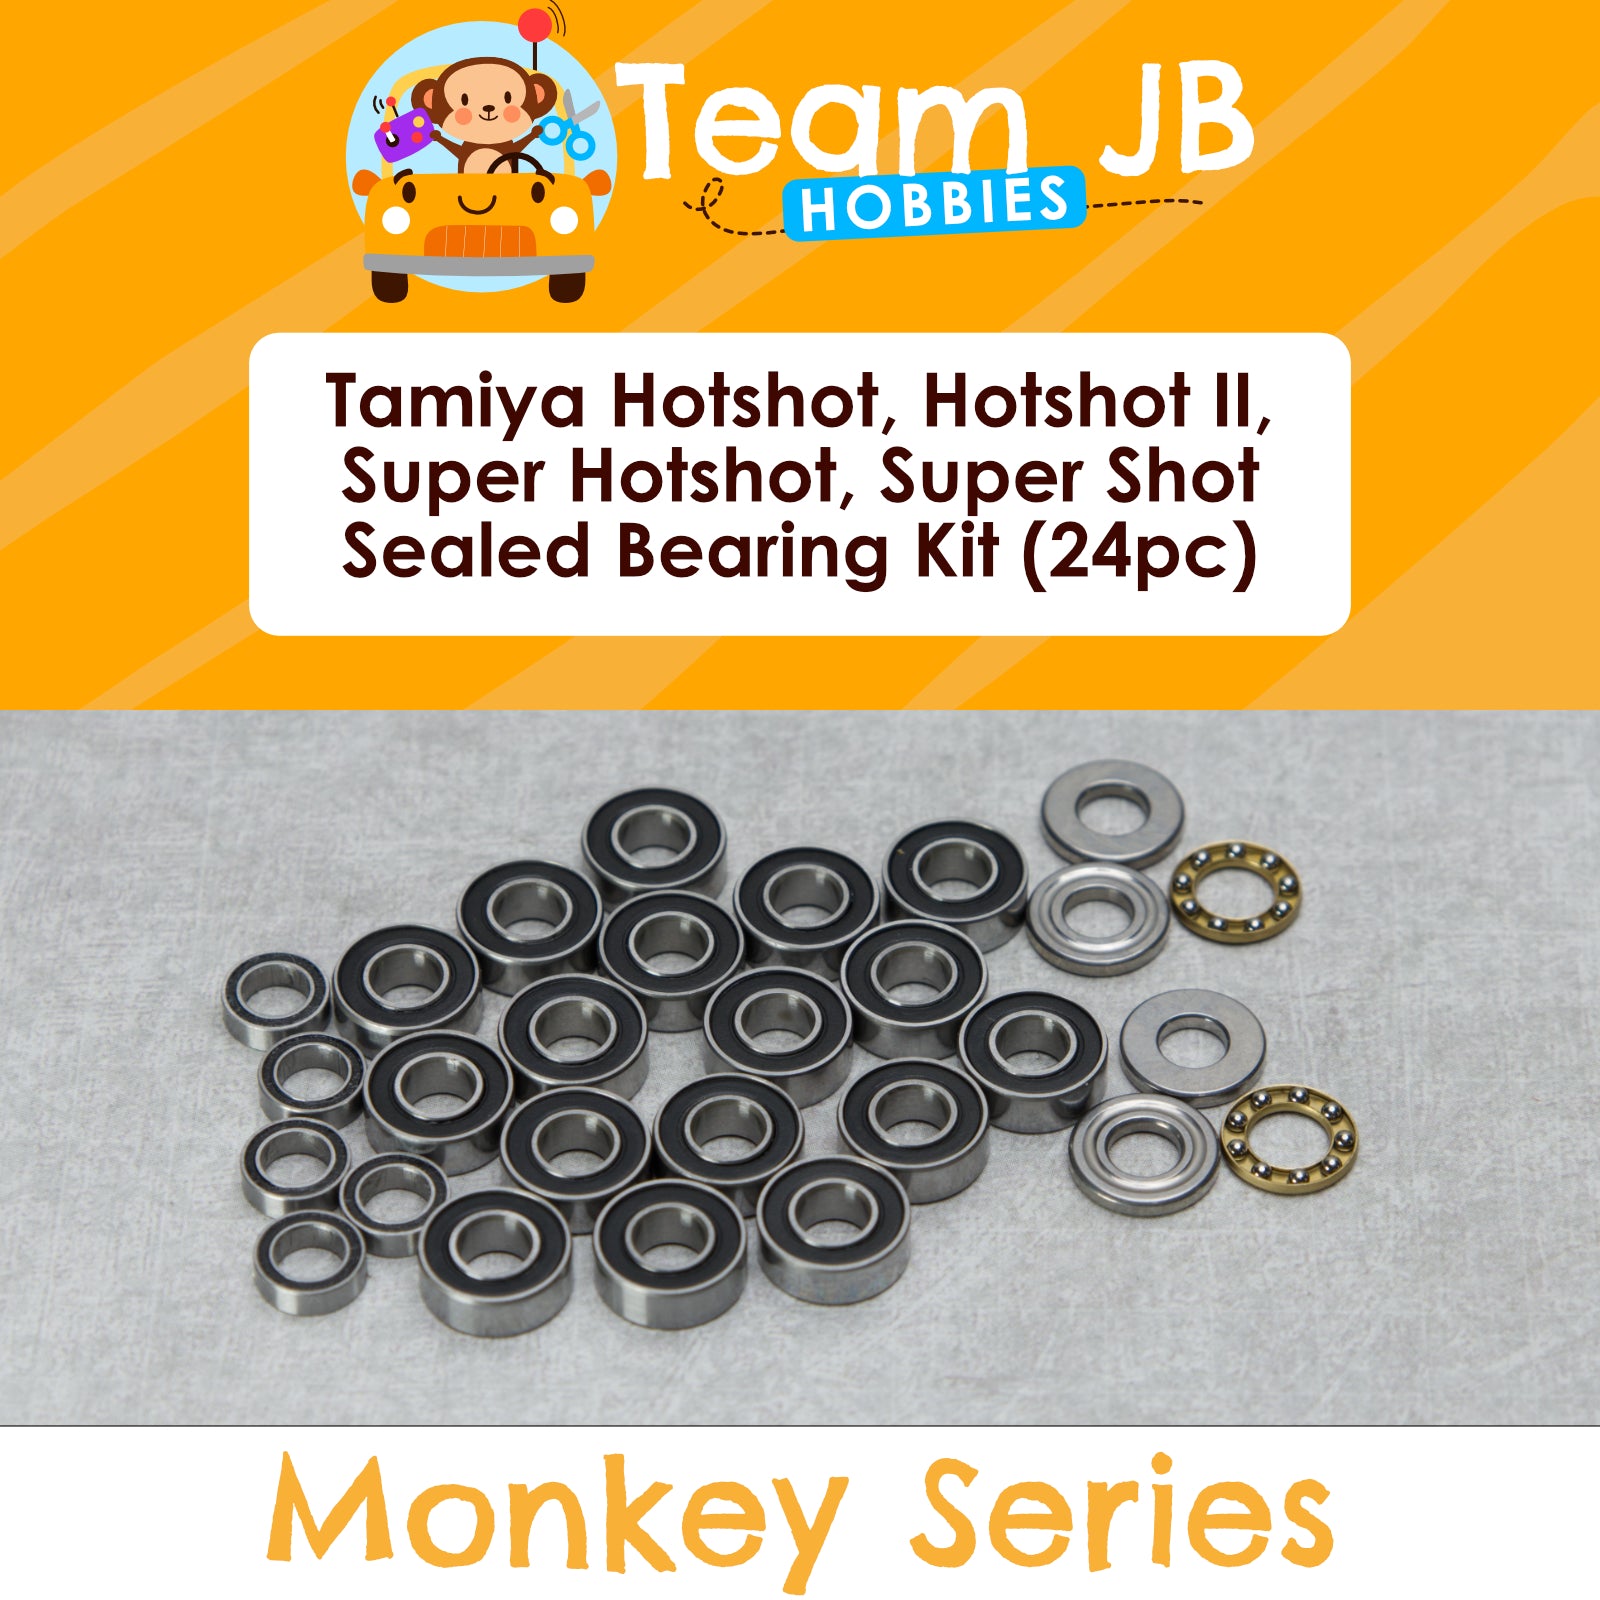 Tamiya Hotshot, Hotshot II, Super Hotshot, Supershot - Sealed Bearing Kit